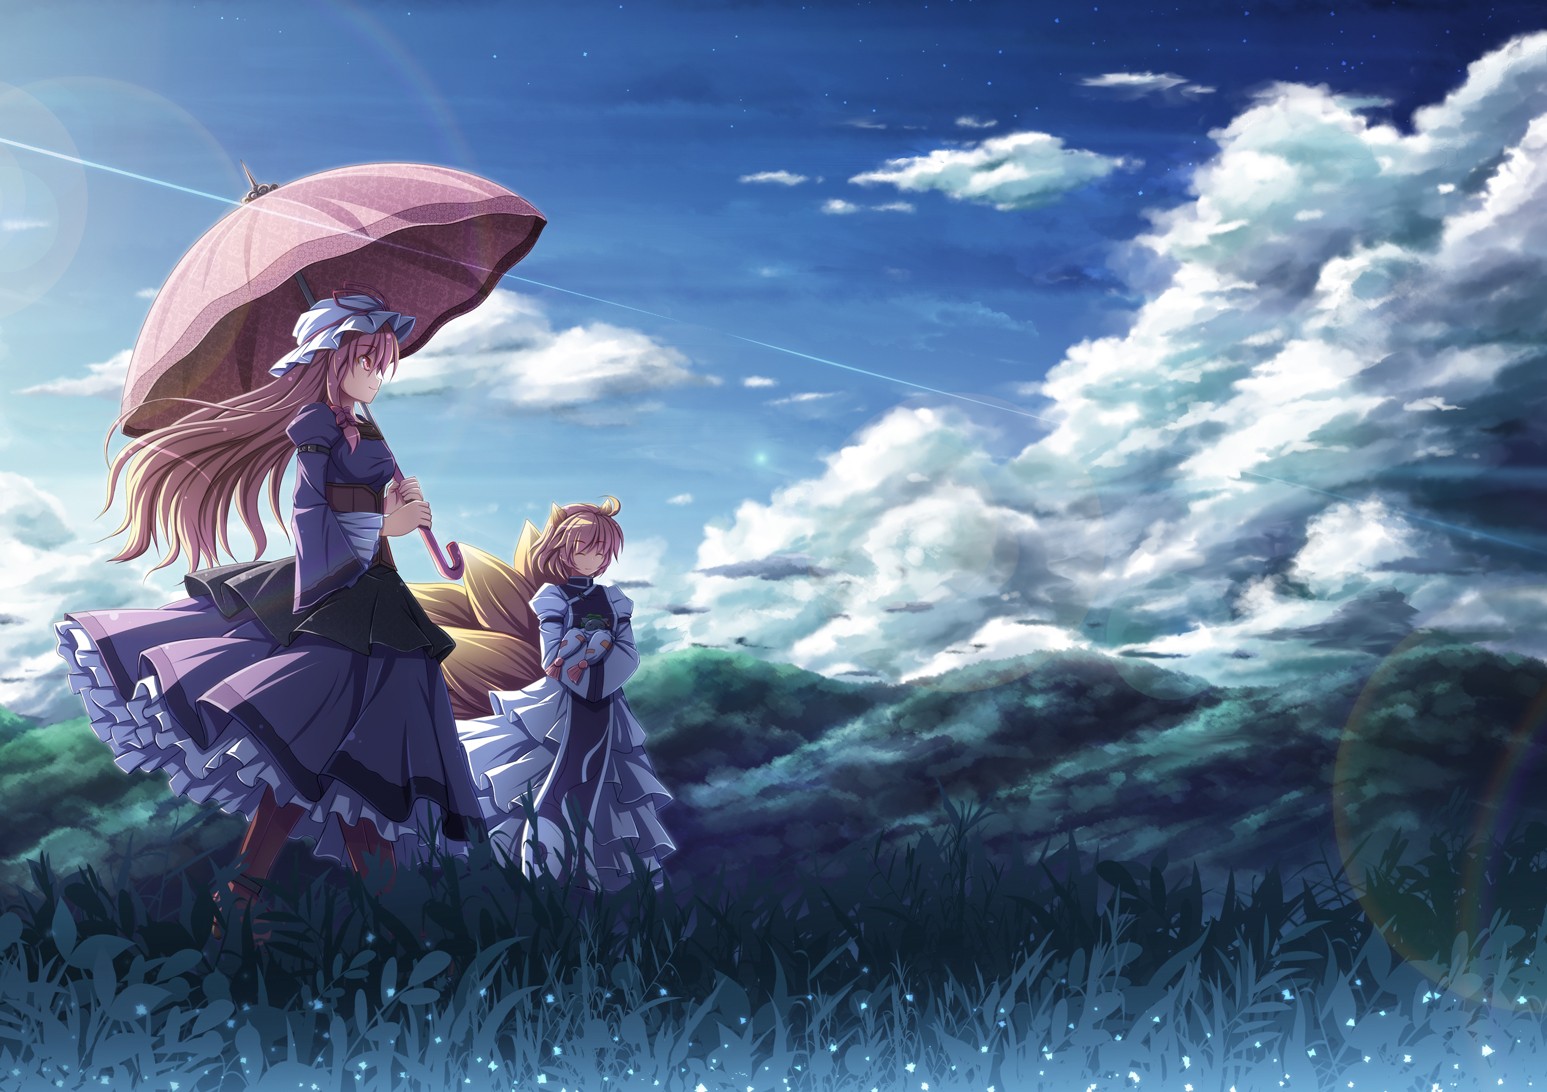 Anime 1547x1092 Touhou anime girls anime sky landscape clouds umbrella two women women outdoors dress